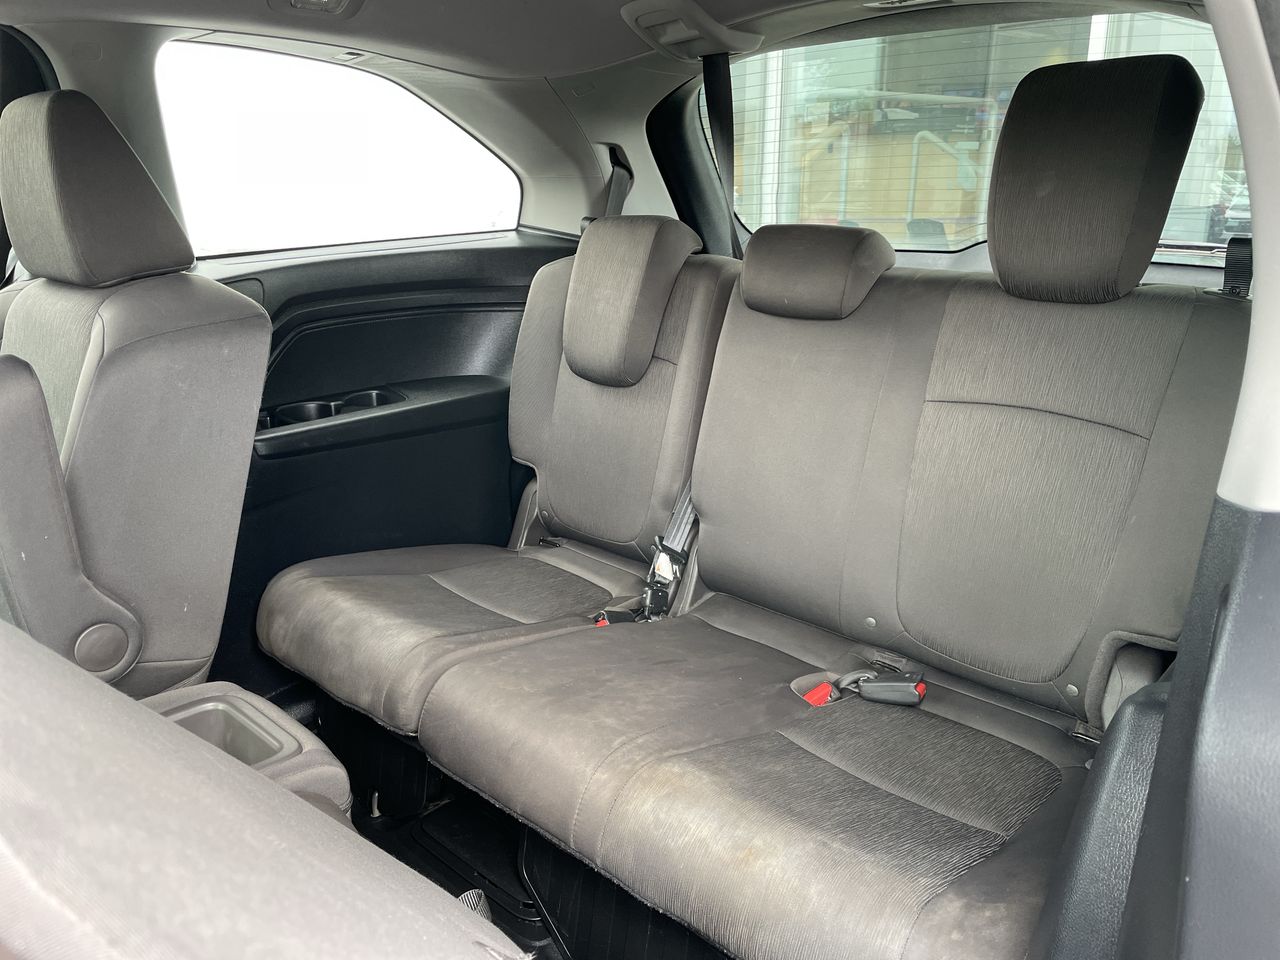 2019 Honda Odyssey - P21095 Full Image 22